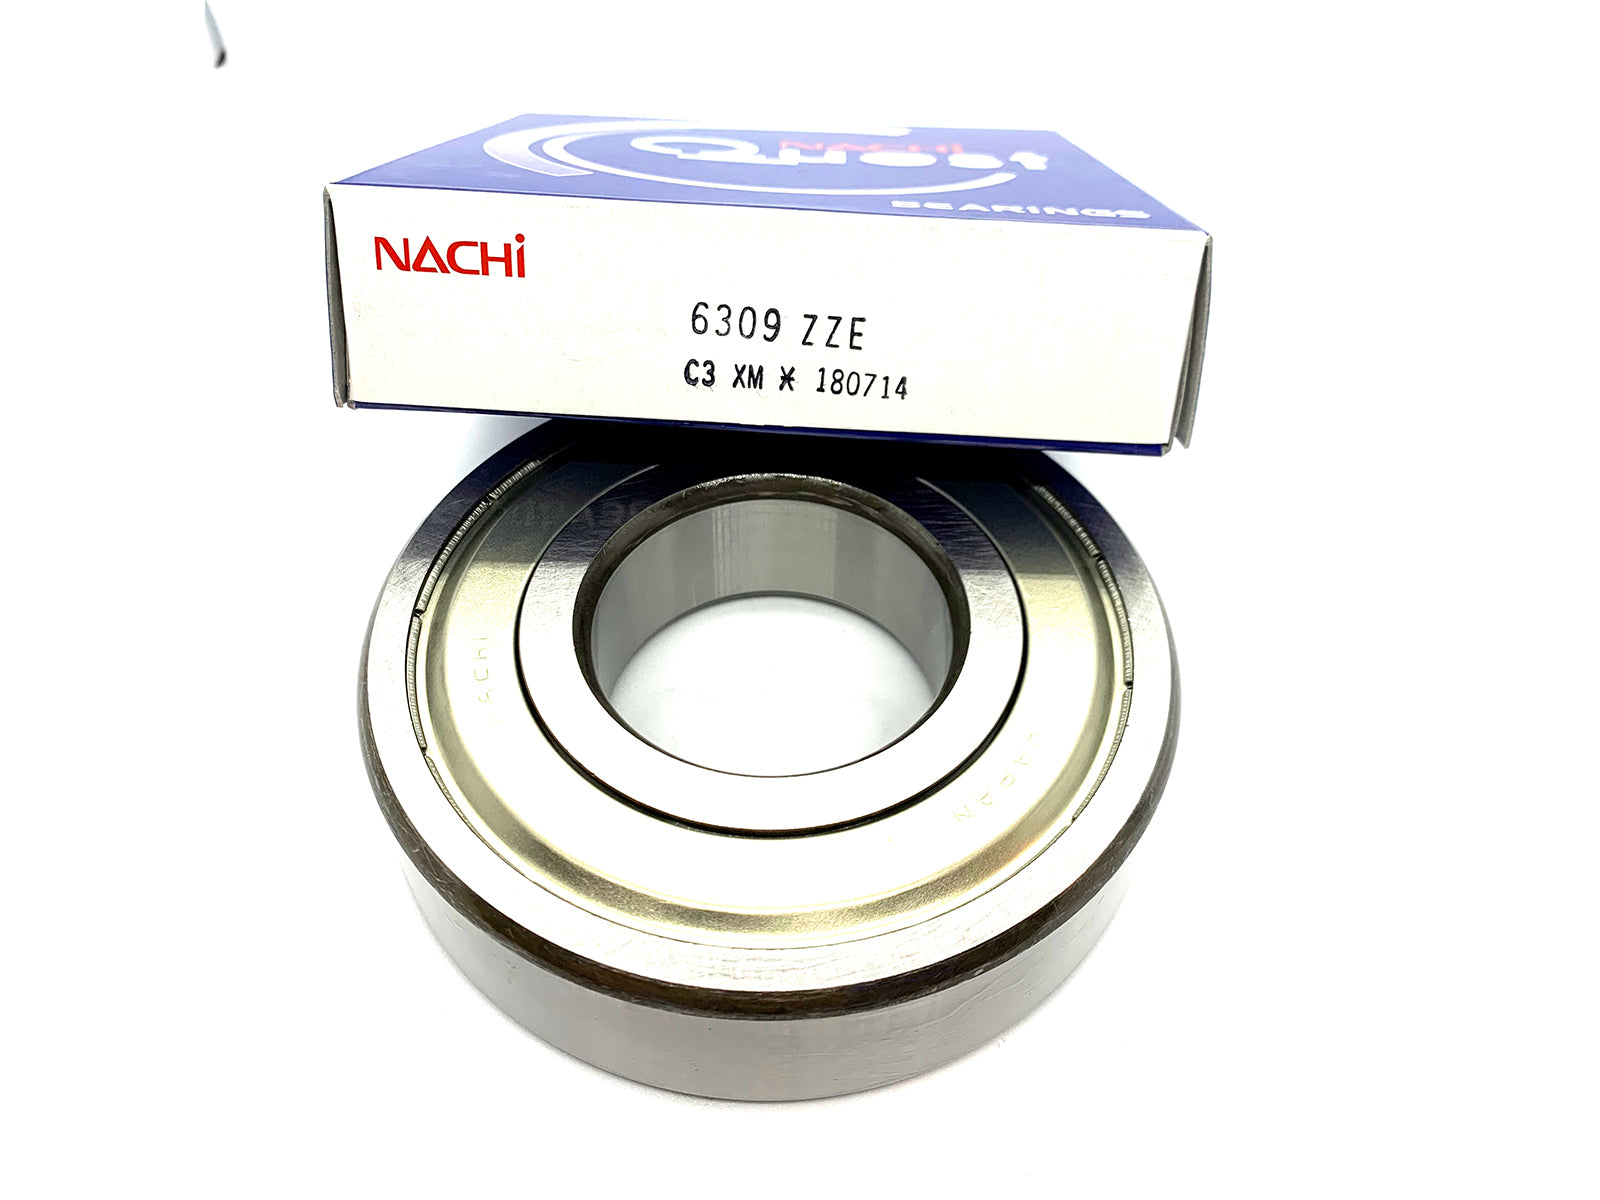 6309-ZZE3 C3 Nachi Ball Bearing - ppdistributors